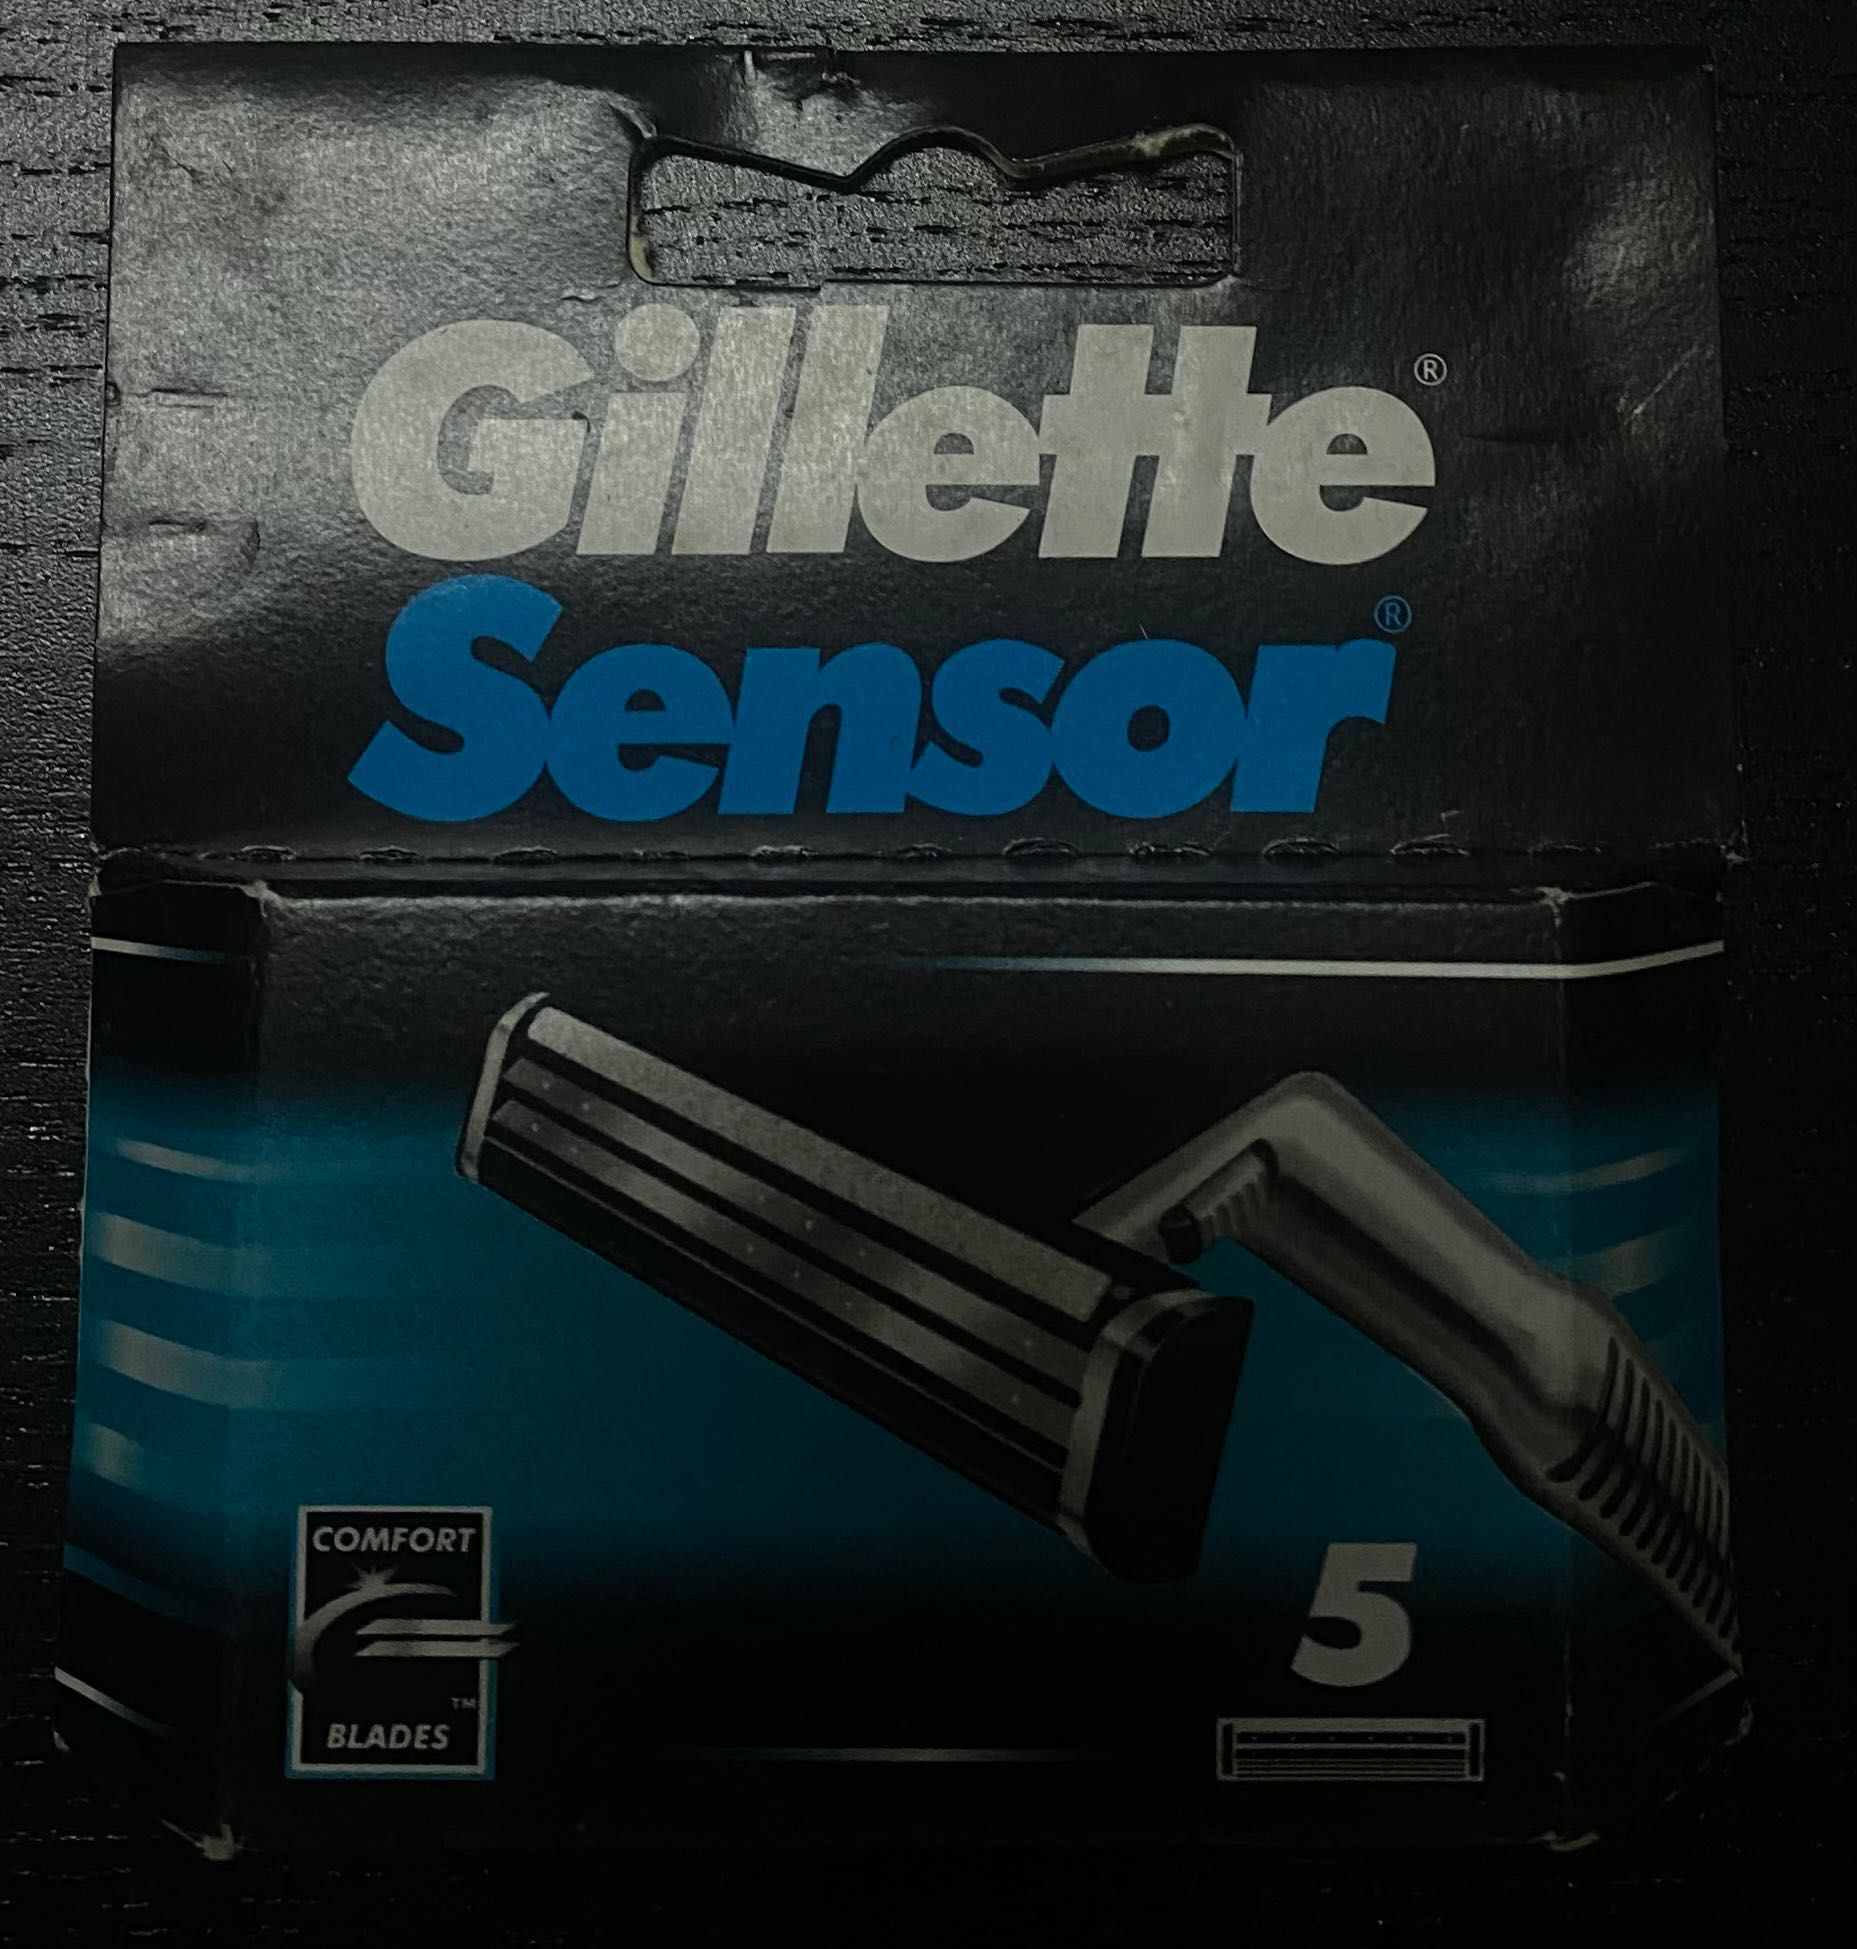 Recargas Gillette Sensor